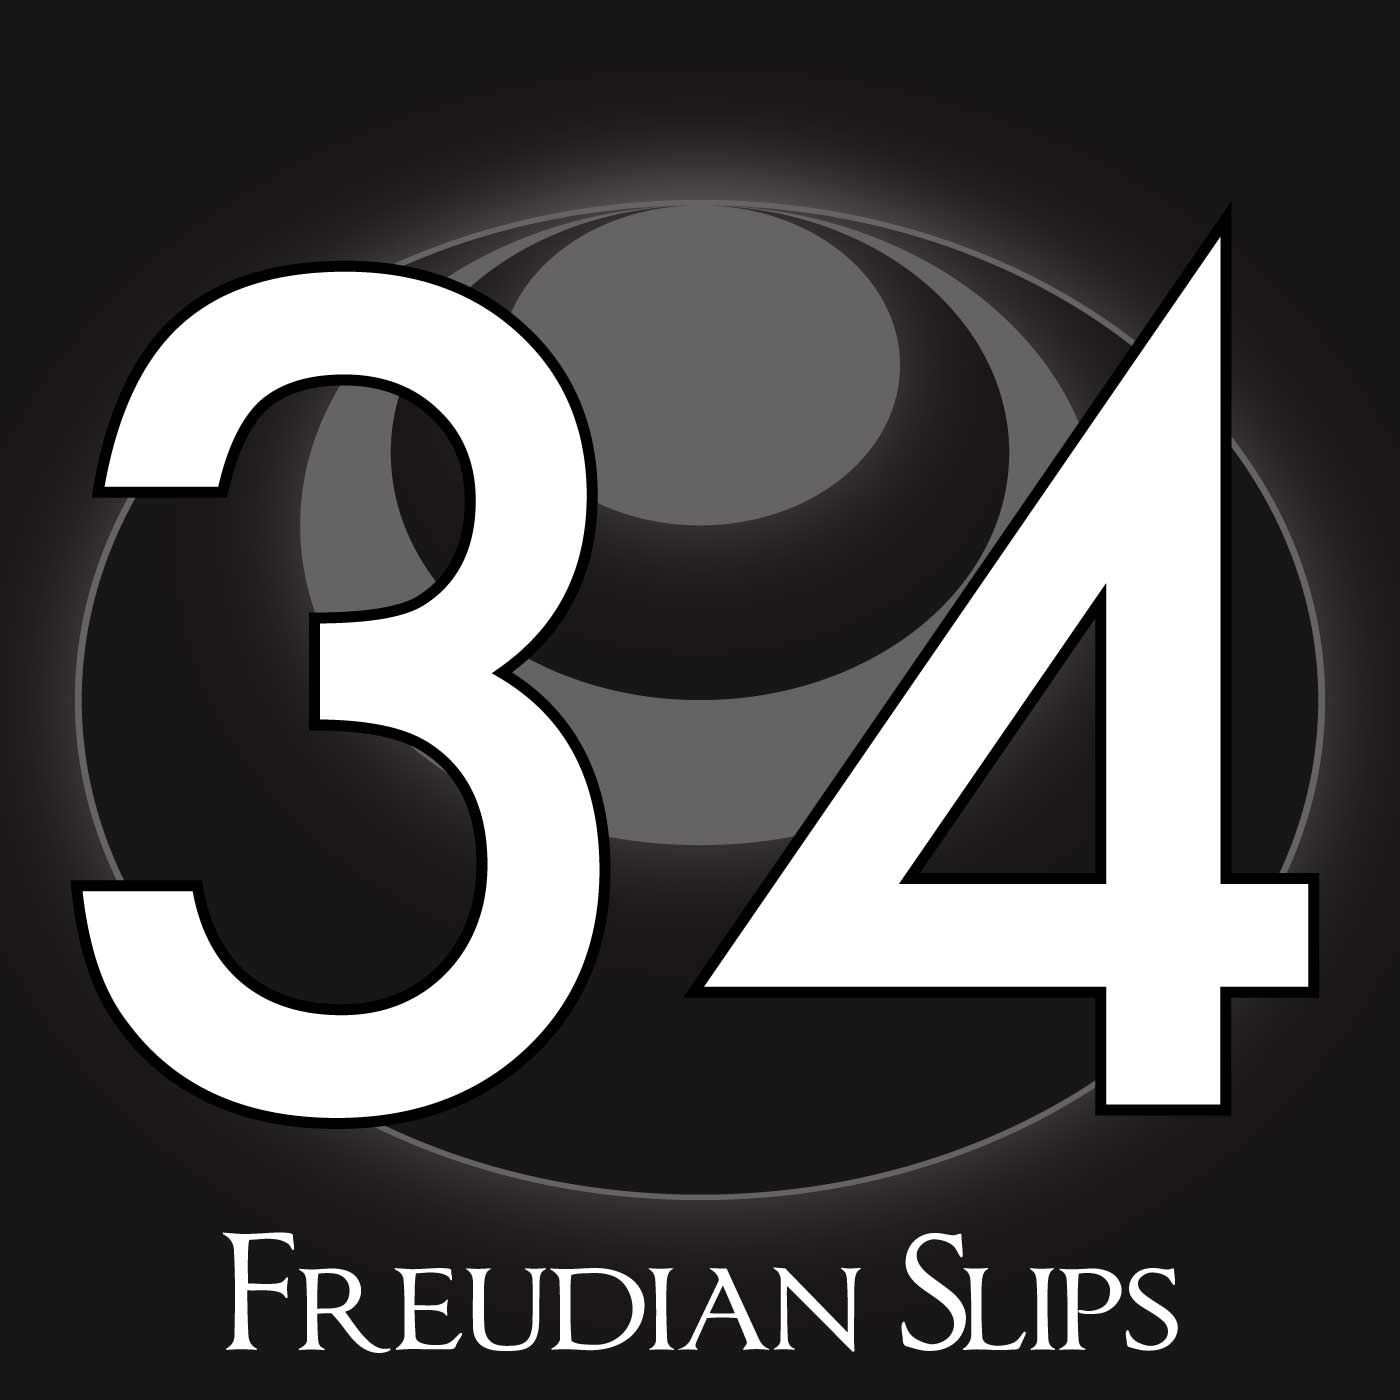 34 – Freudian Slips